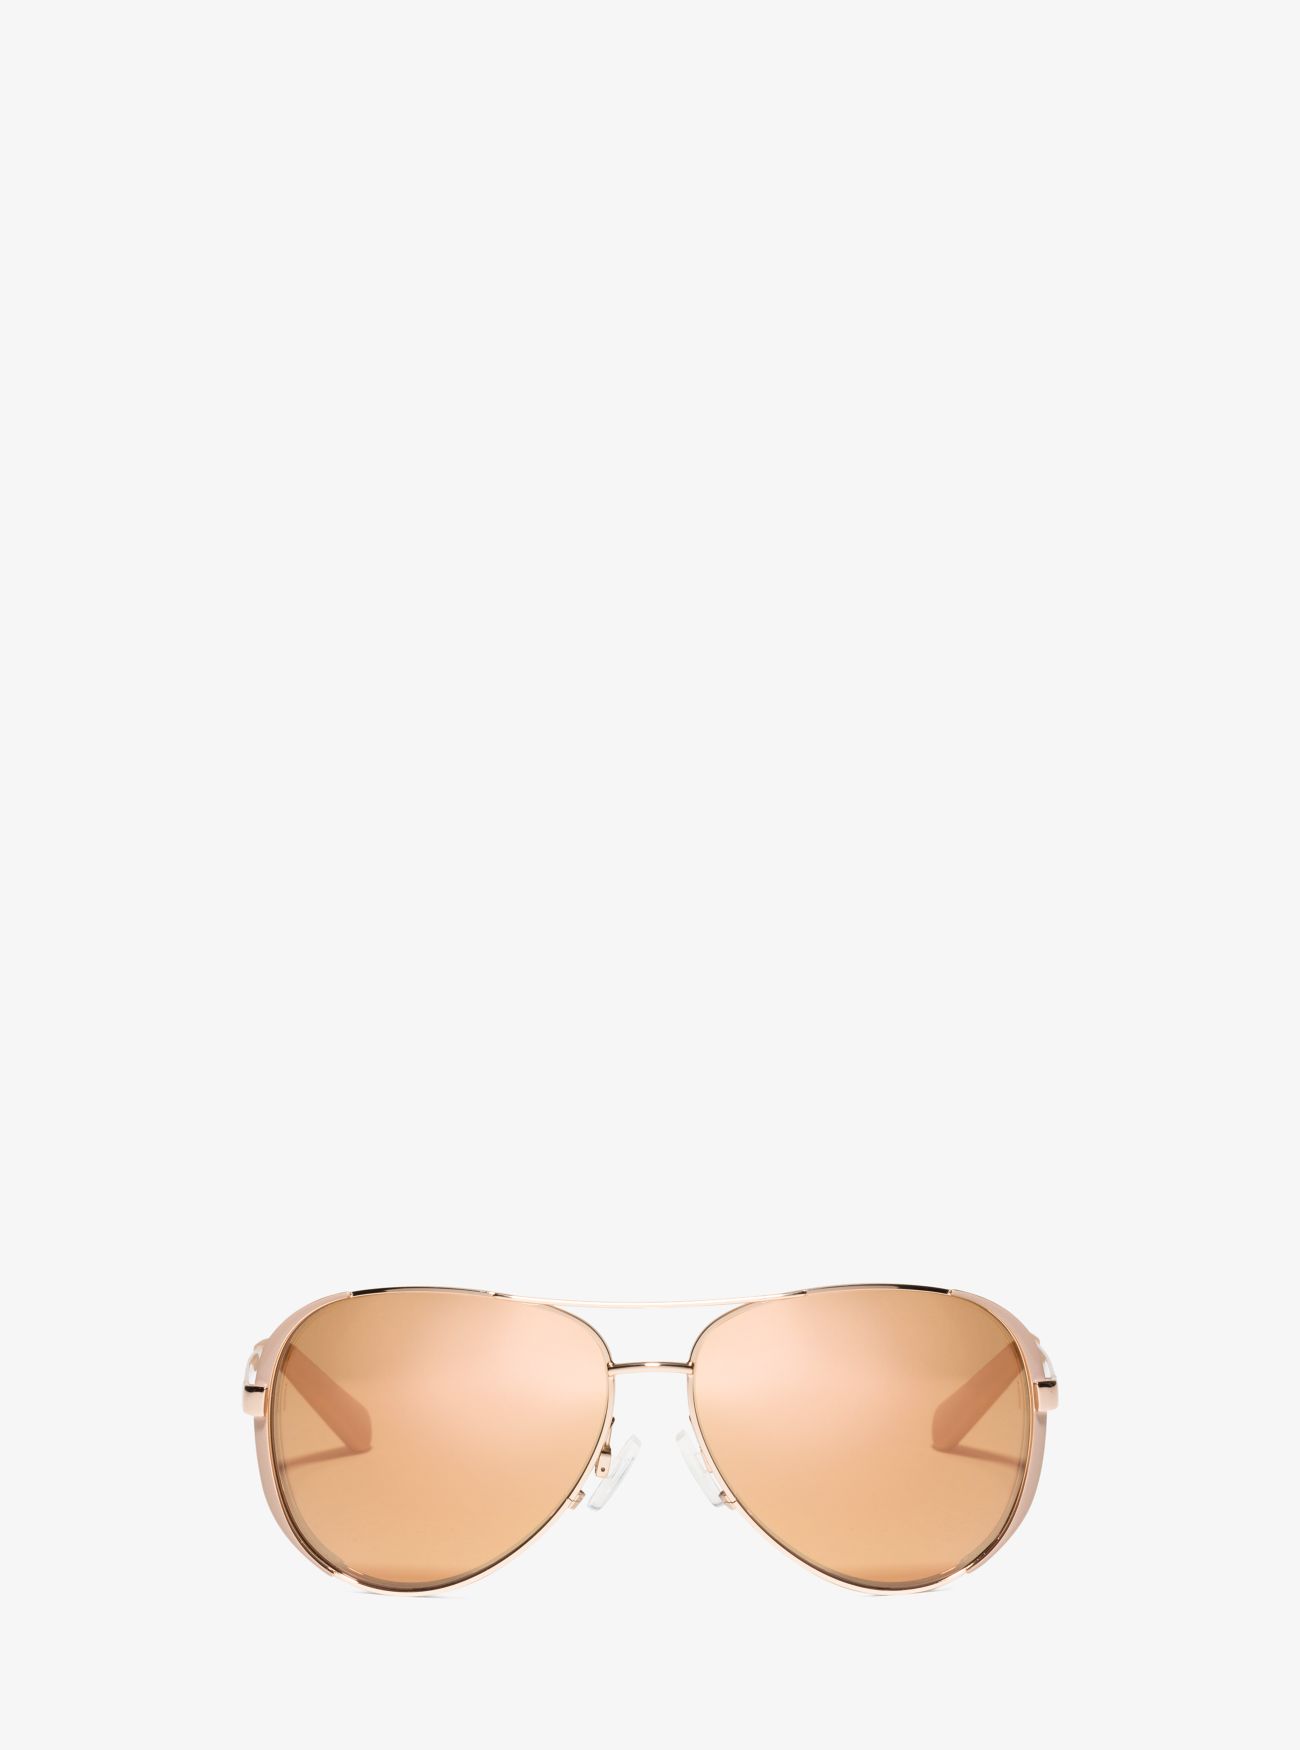 MK Chelsea Sunglasses - Rose Gold - Michael Kors